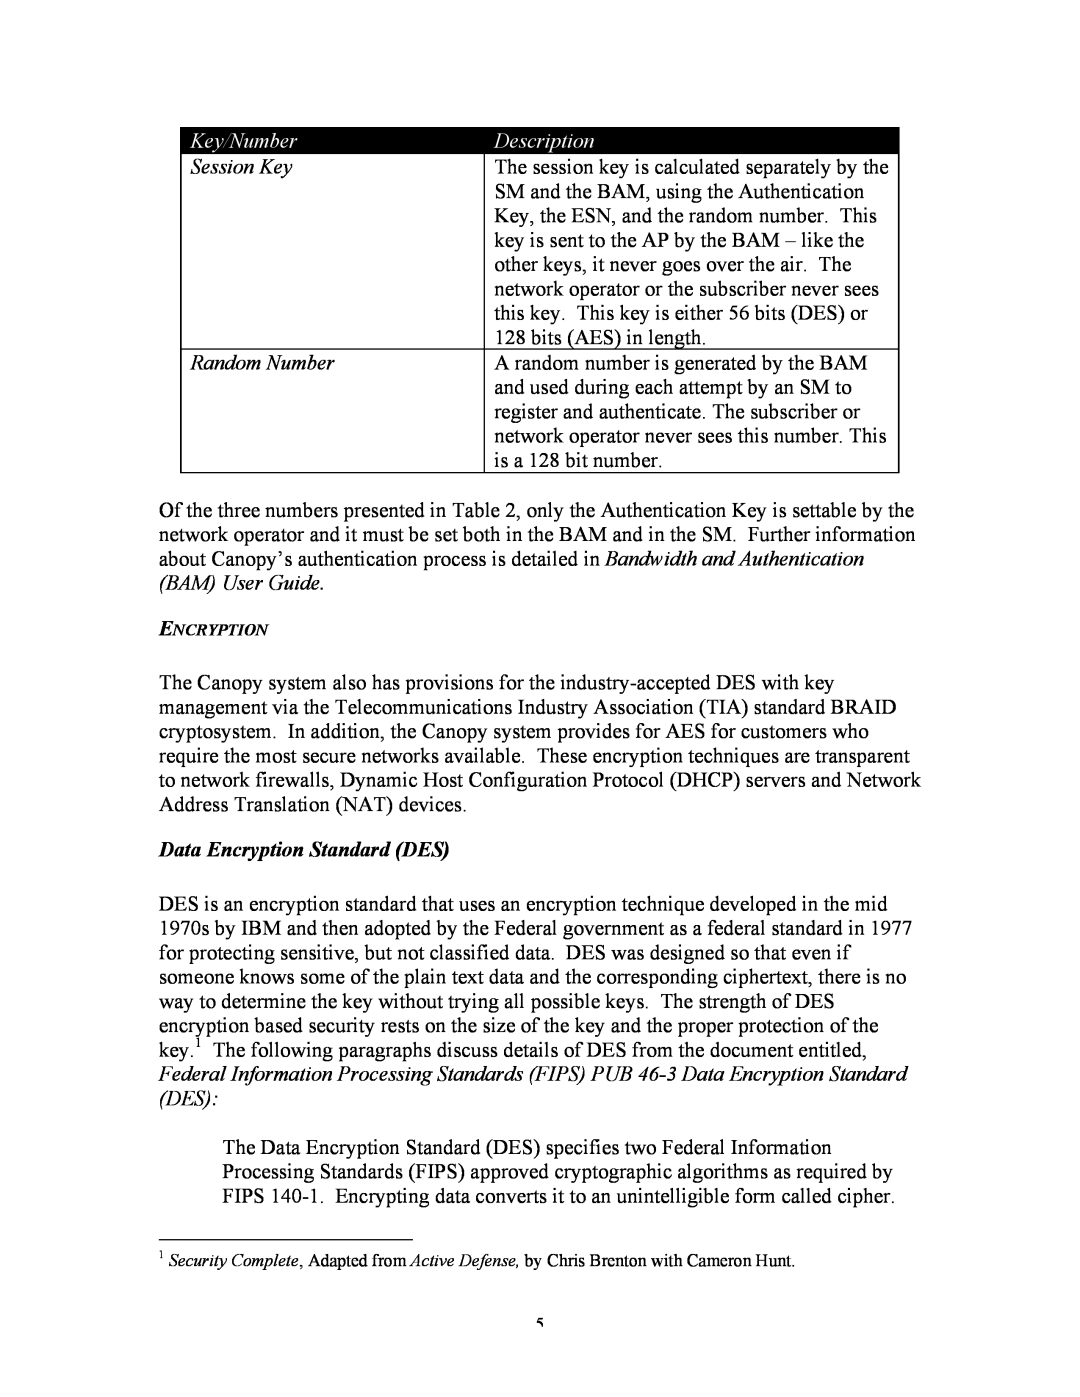 Motorola Wireless Broadband Platform manual Data Encryption Standard DES, Key/Number, Description 